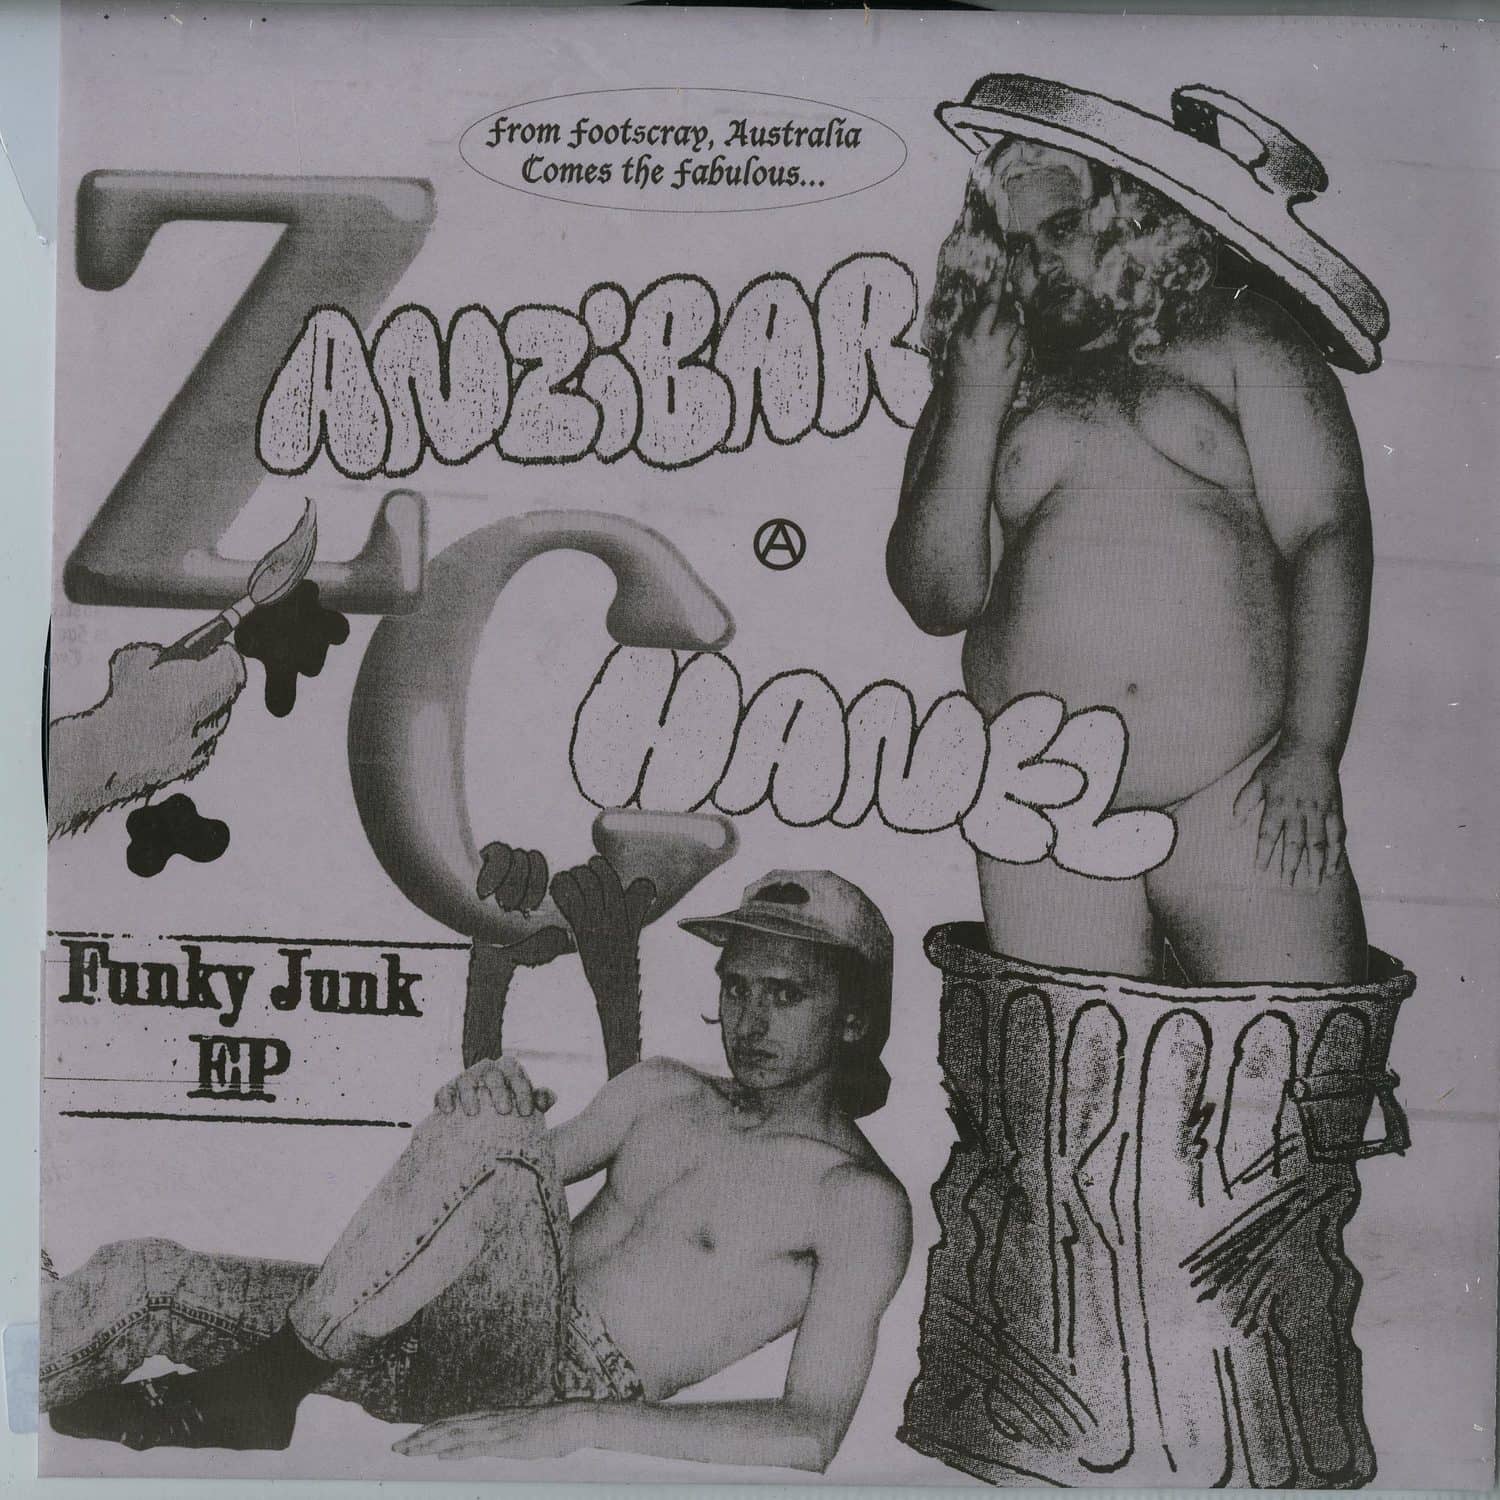 Zanzibar Chanel - FUNKY JUNK EP